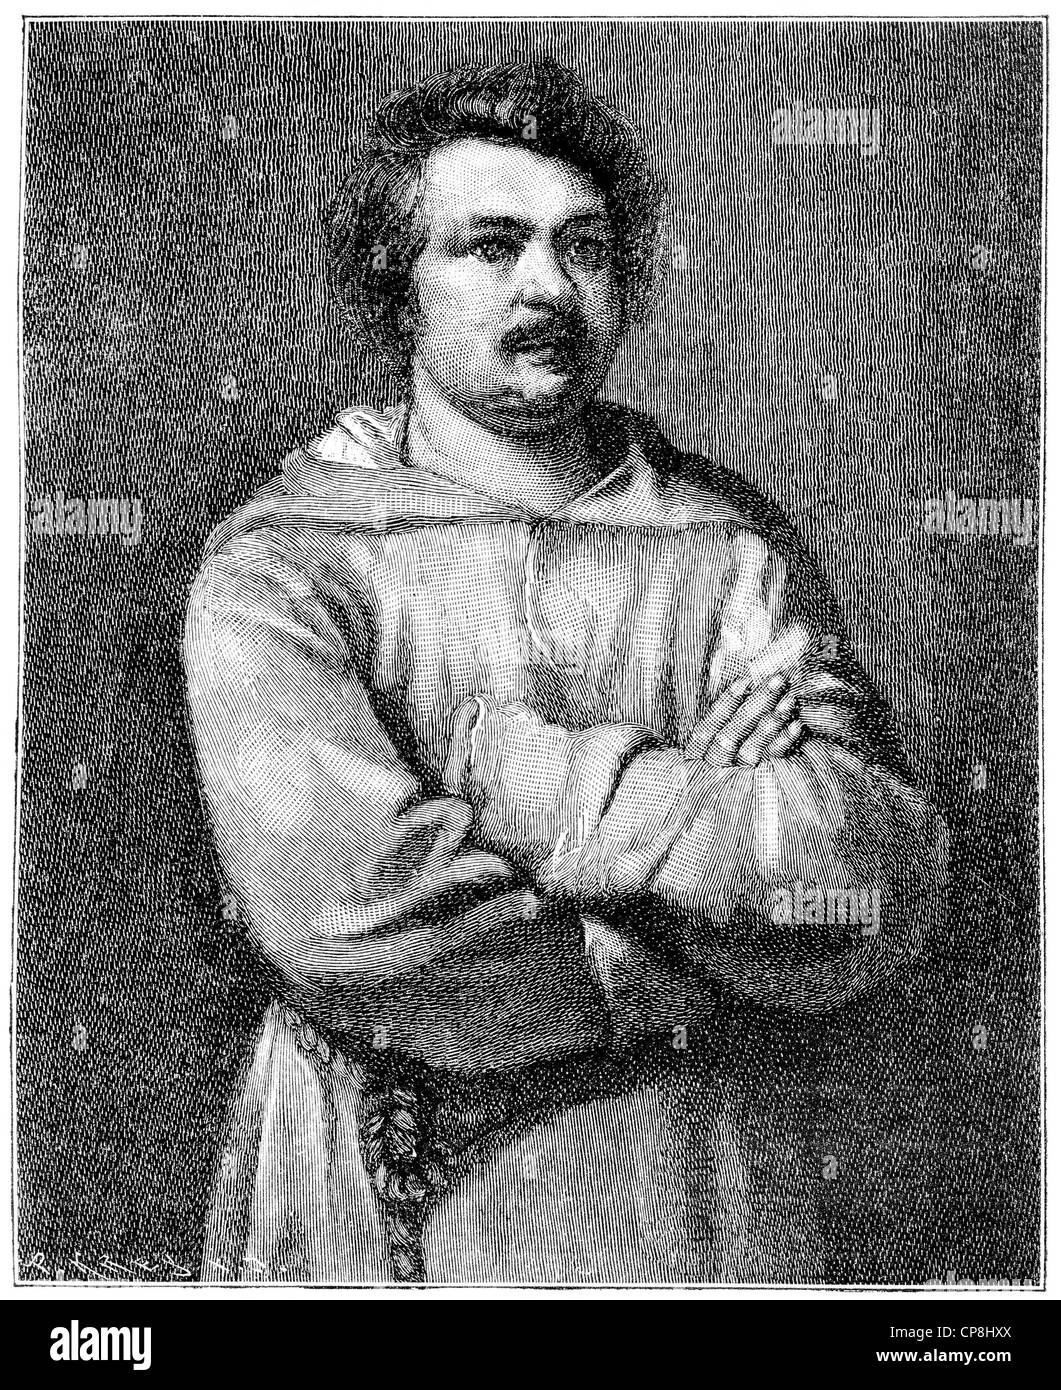 Honoré de Balzac, 1799 - 1850, a French writer, Historische Druck aus dem 19. Jahrhundert, Portrait von Honoré de Balzac, 1799 - Stock Photo